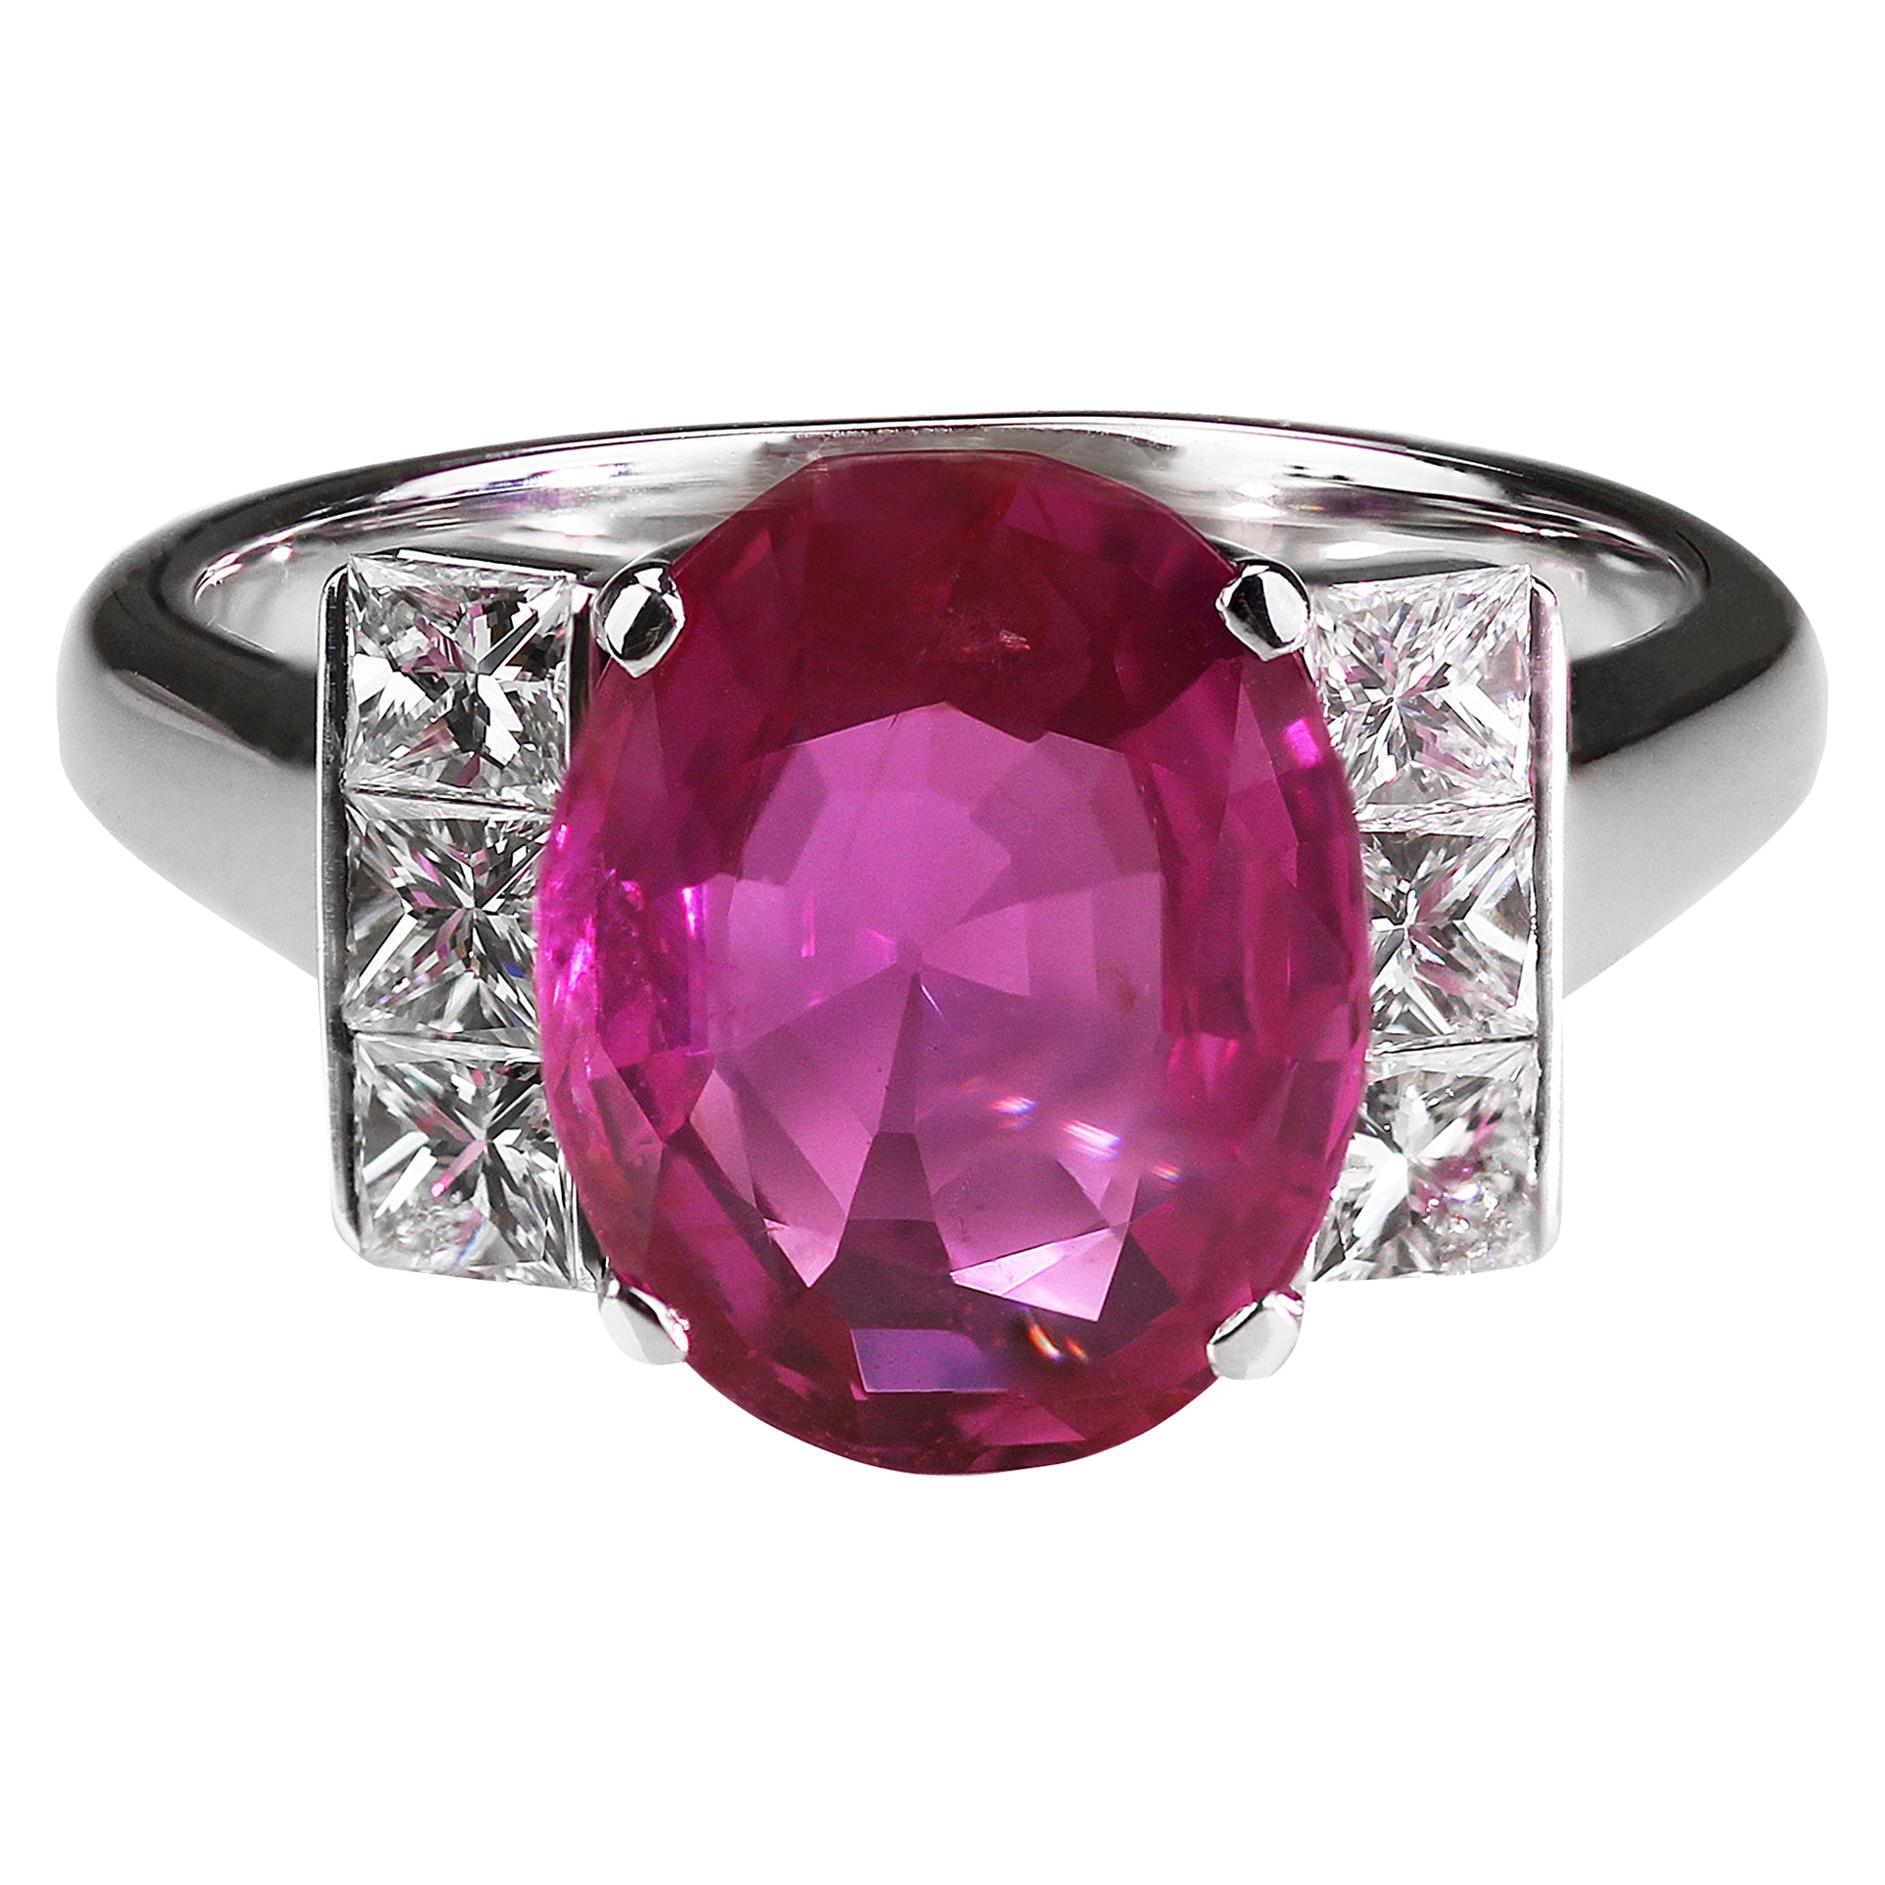 Gubelin Certified Natural Burma/Myanmar Pink Sapphire 4.5 Carat and Diamond Ring